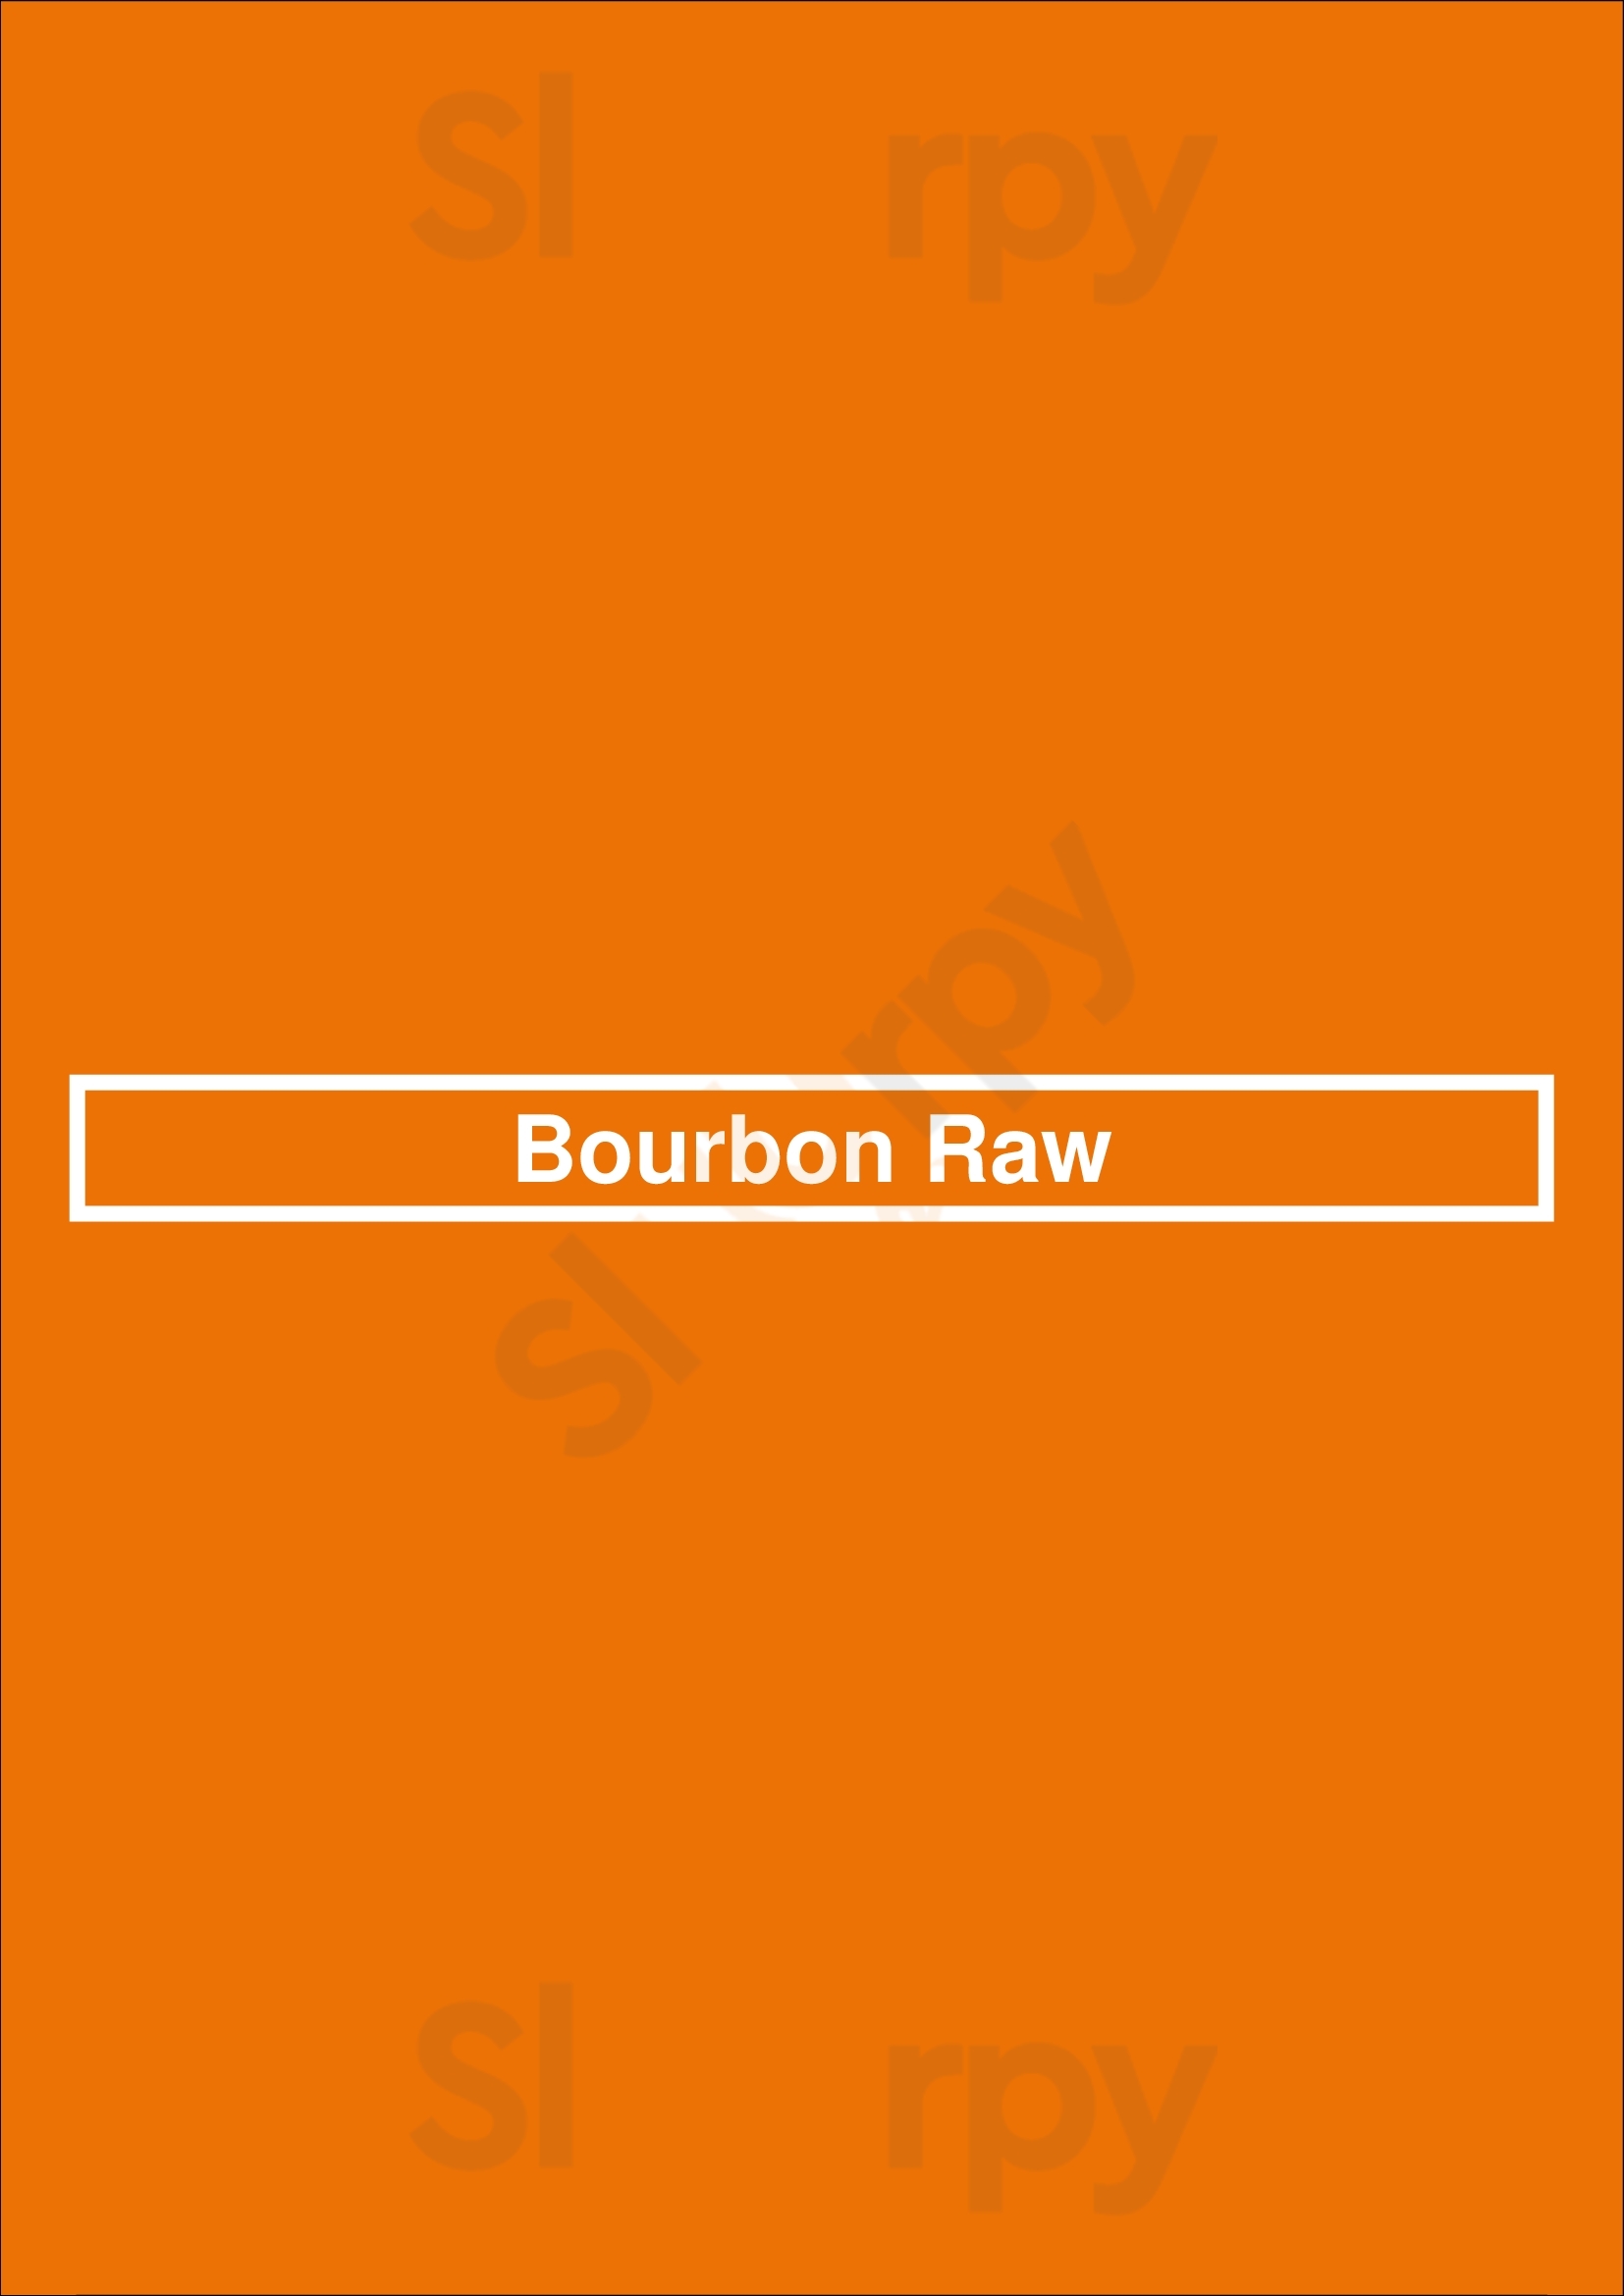 Bourbon Raw Louisville Menu - 1